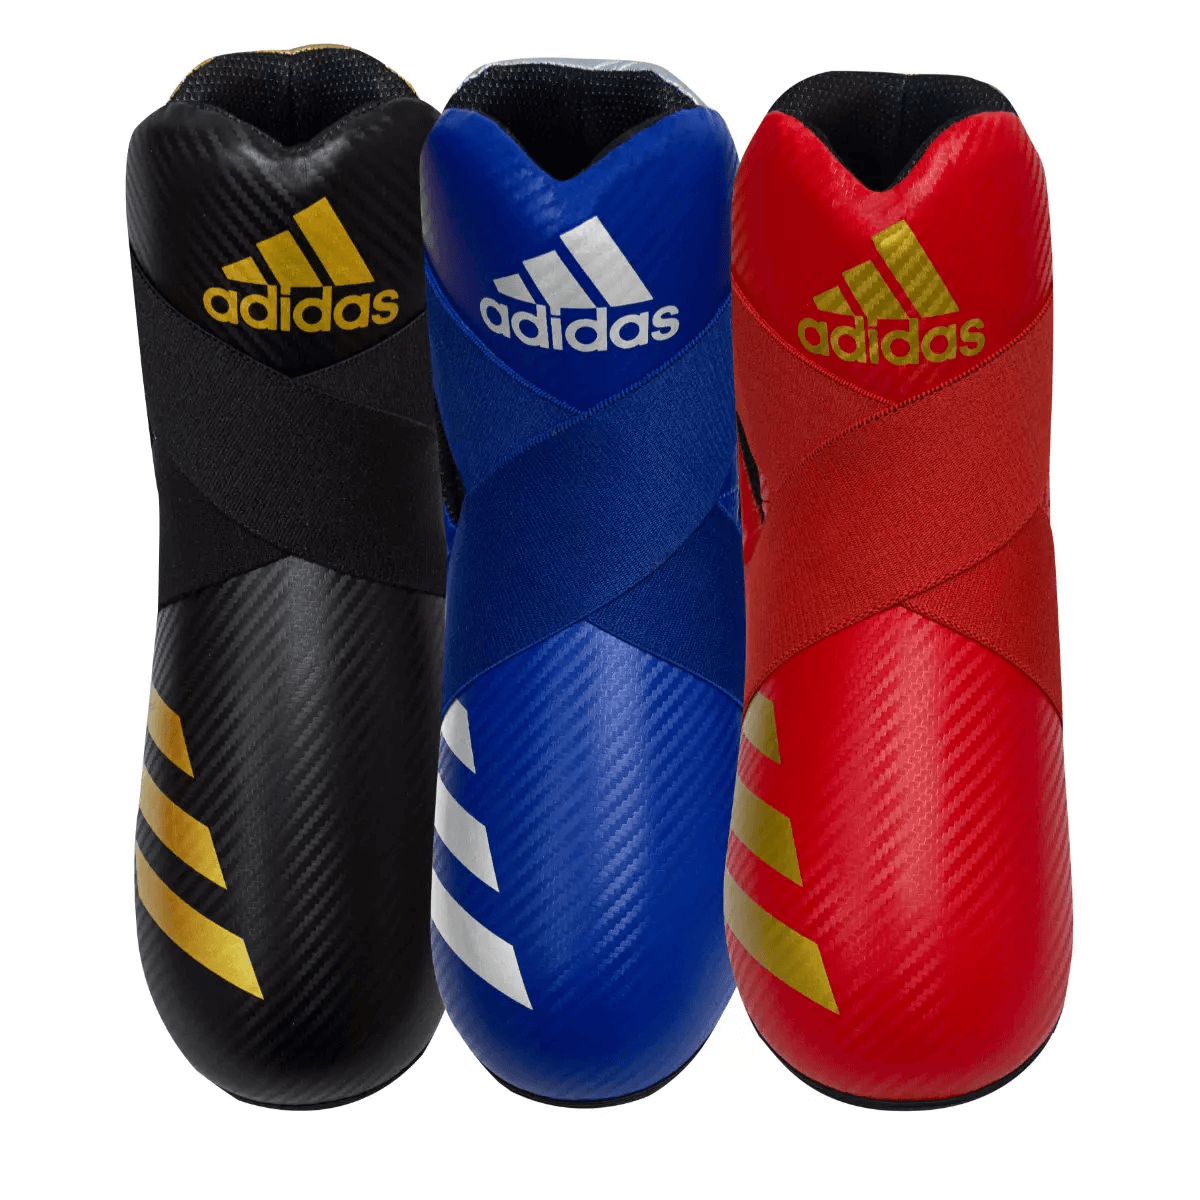 adidas Pro Semi Contact Foot Guards Kickboxing Boots